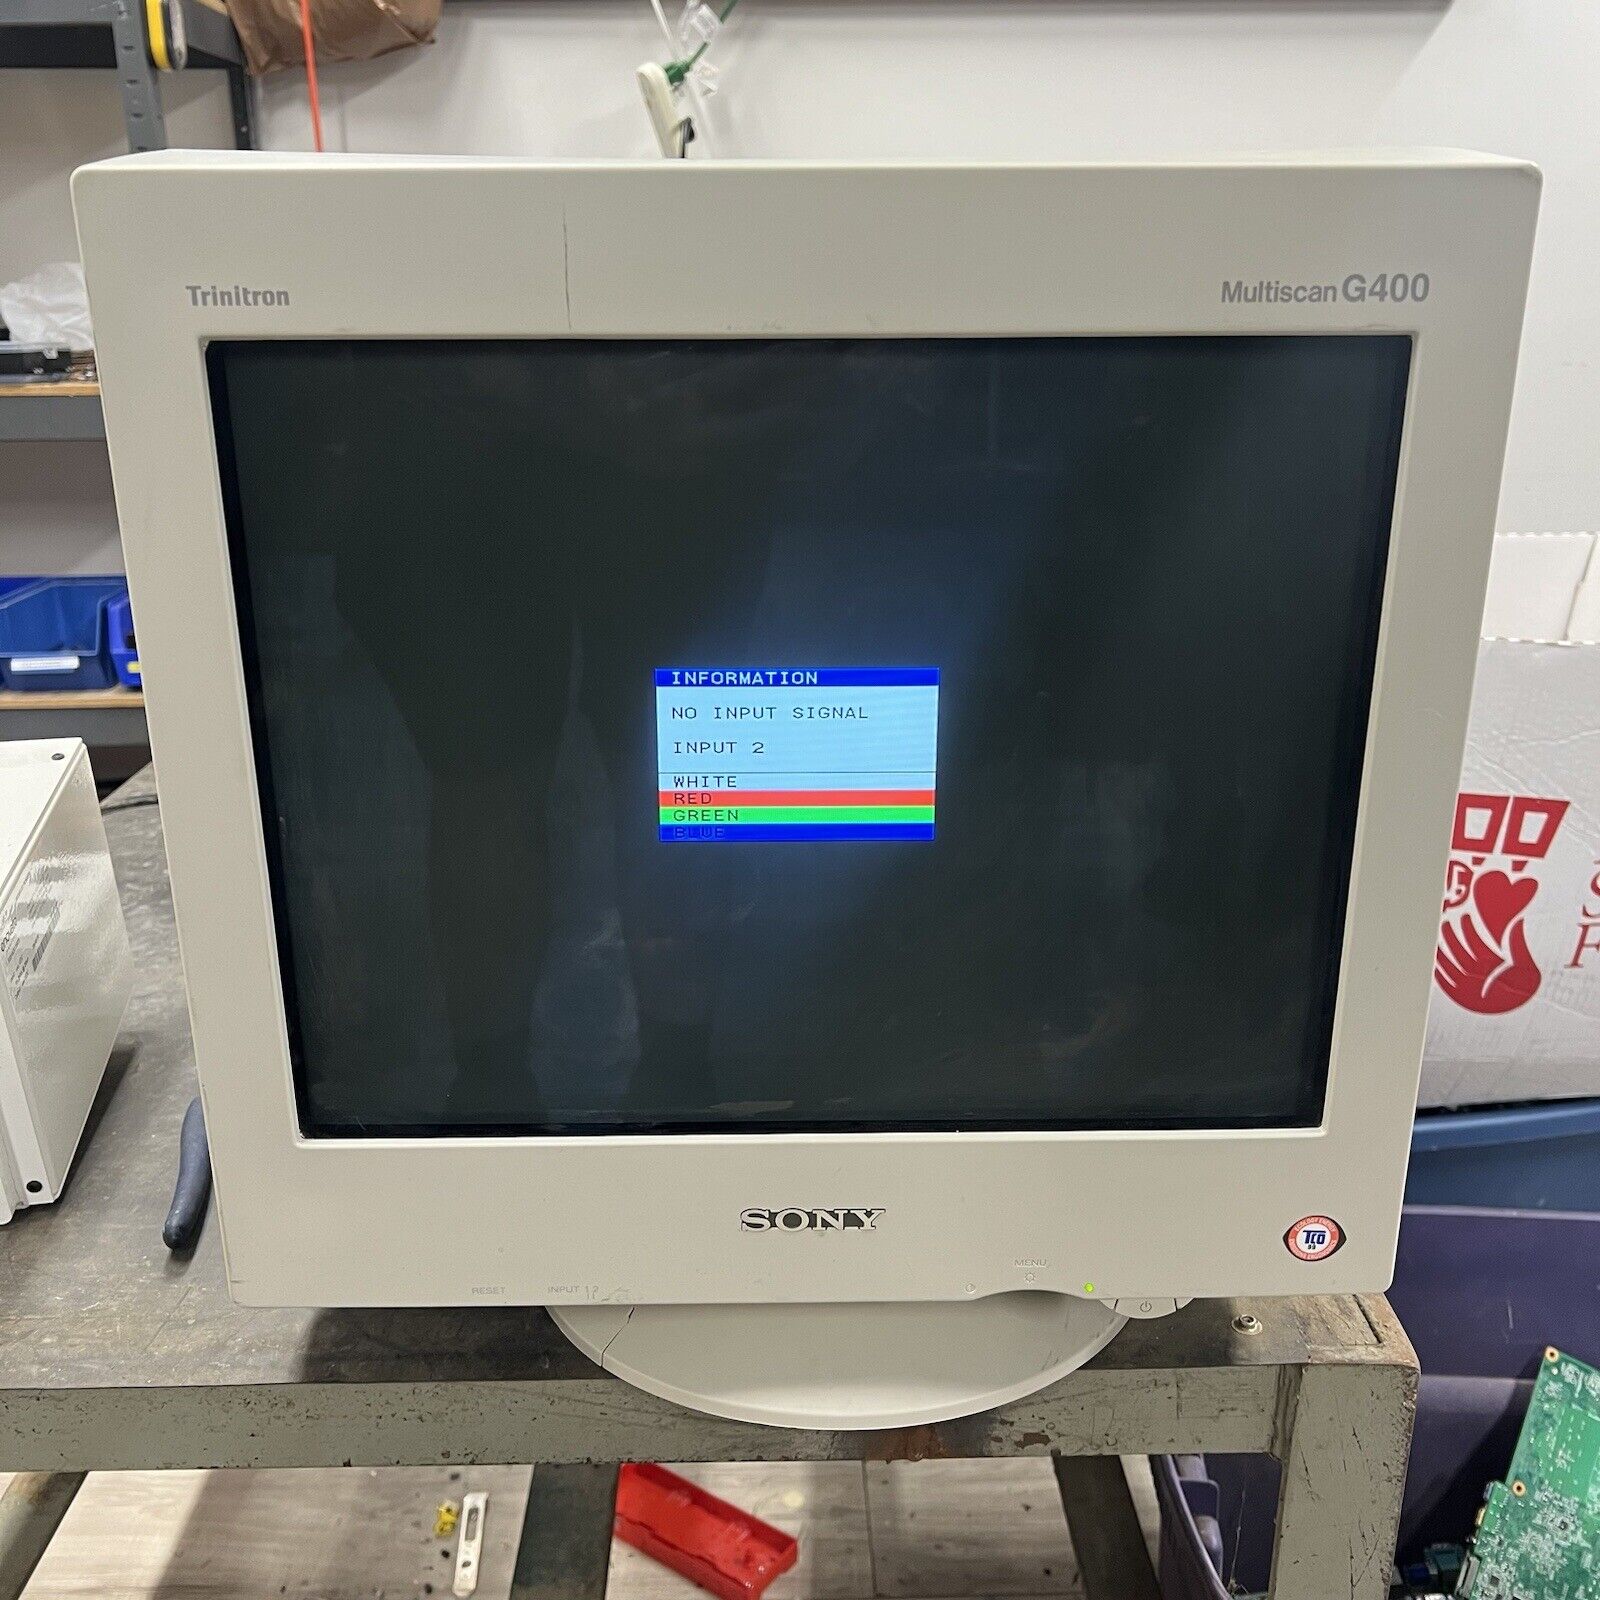 Sony Trinitron Multiscan CPD-G400 19” VGA CRT Monitor Retro Computer Display